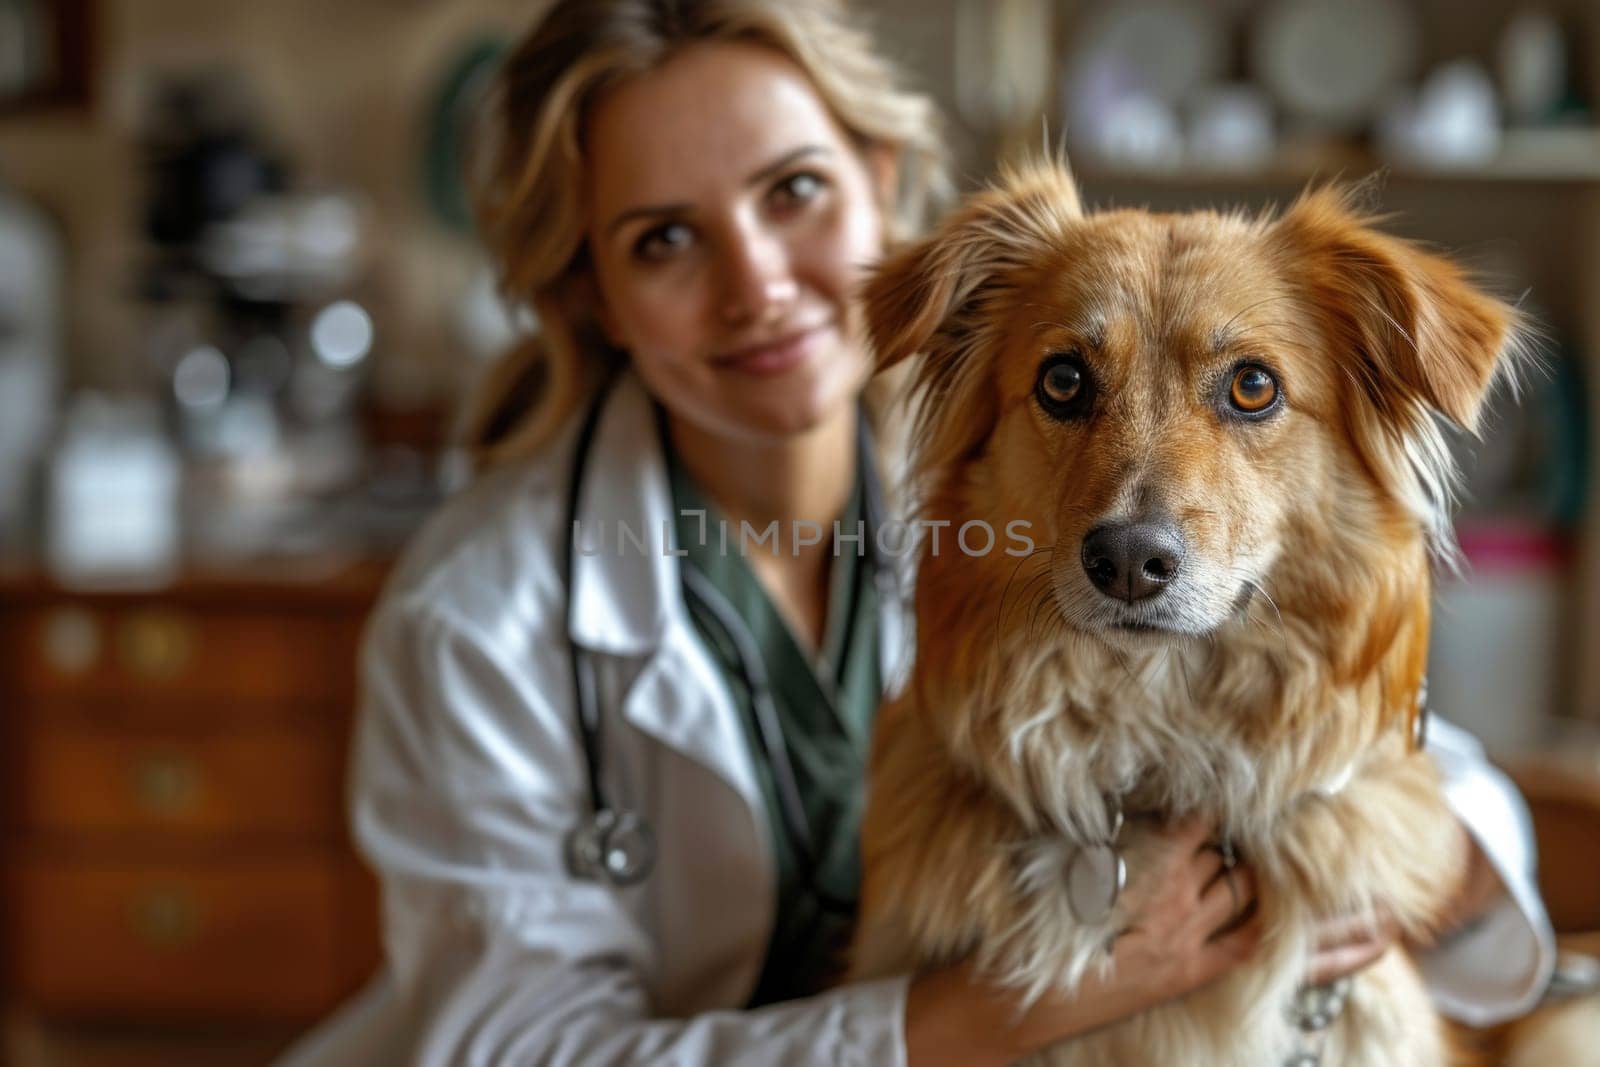 Home Vet Visit: Professional Pet Care by Yurich32